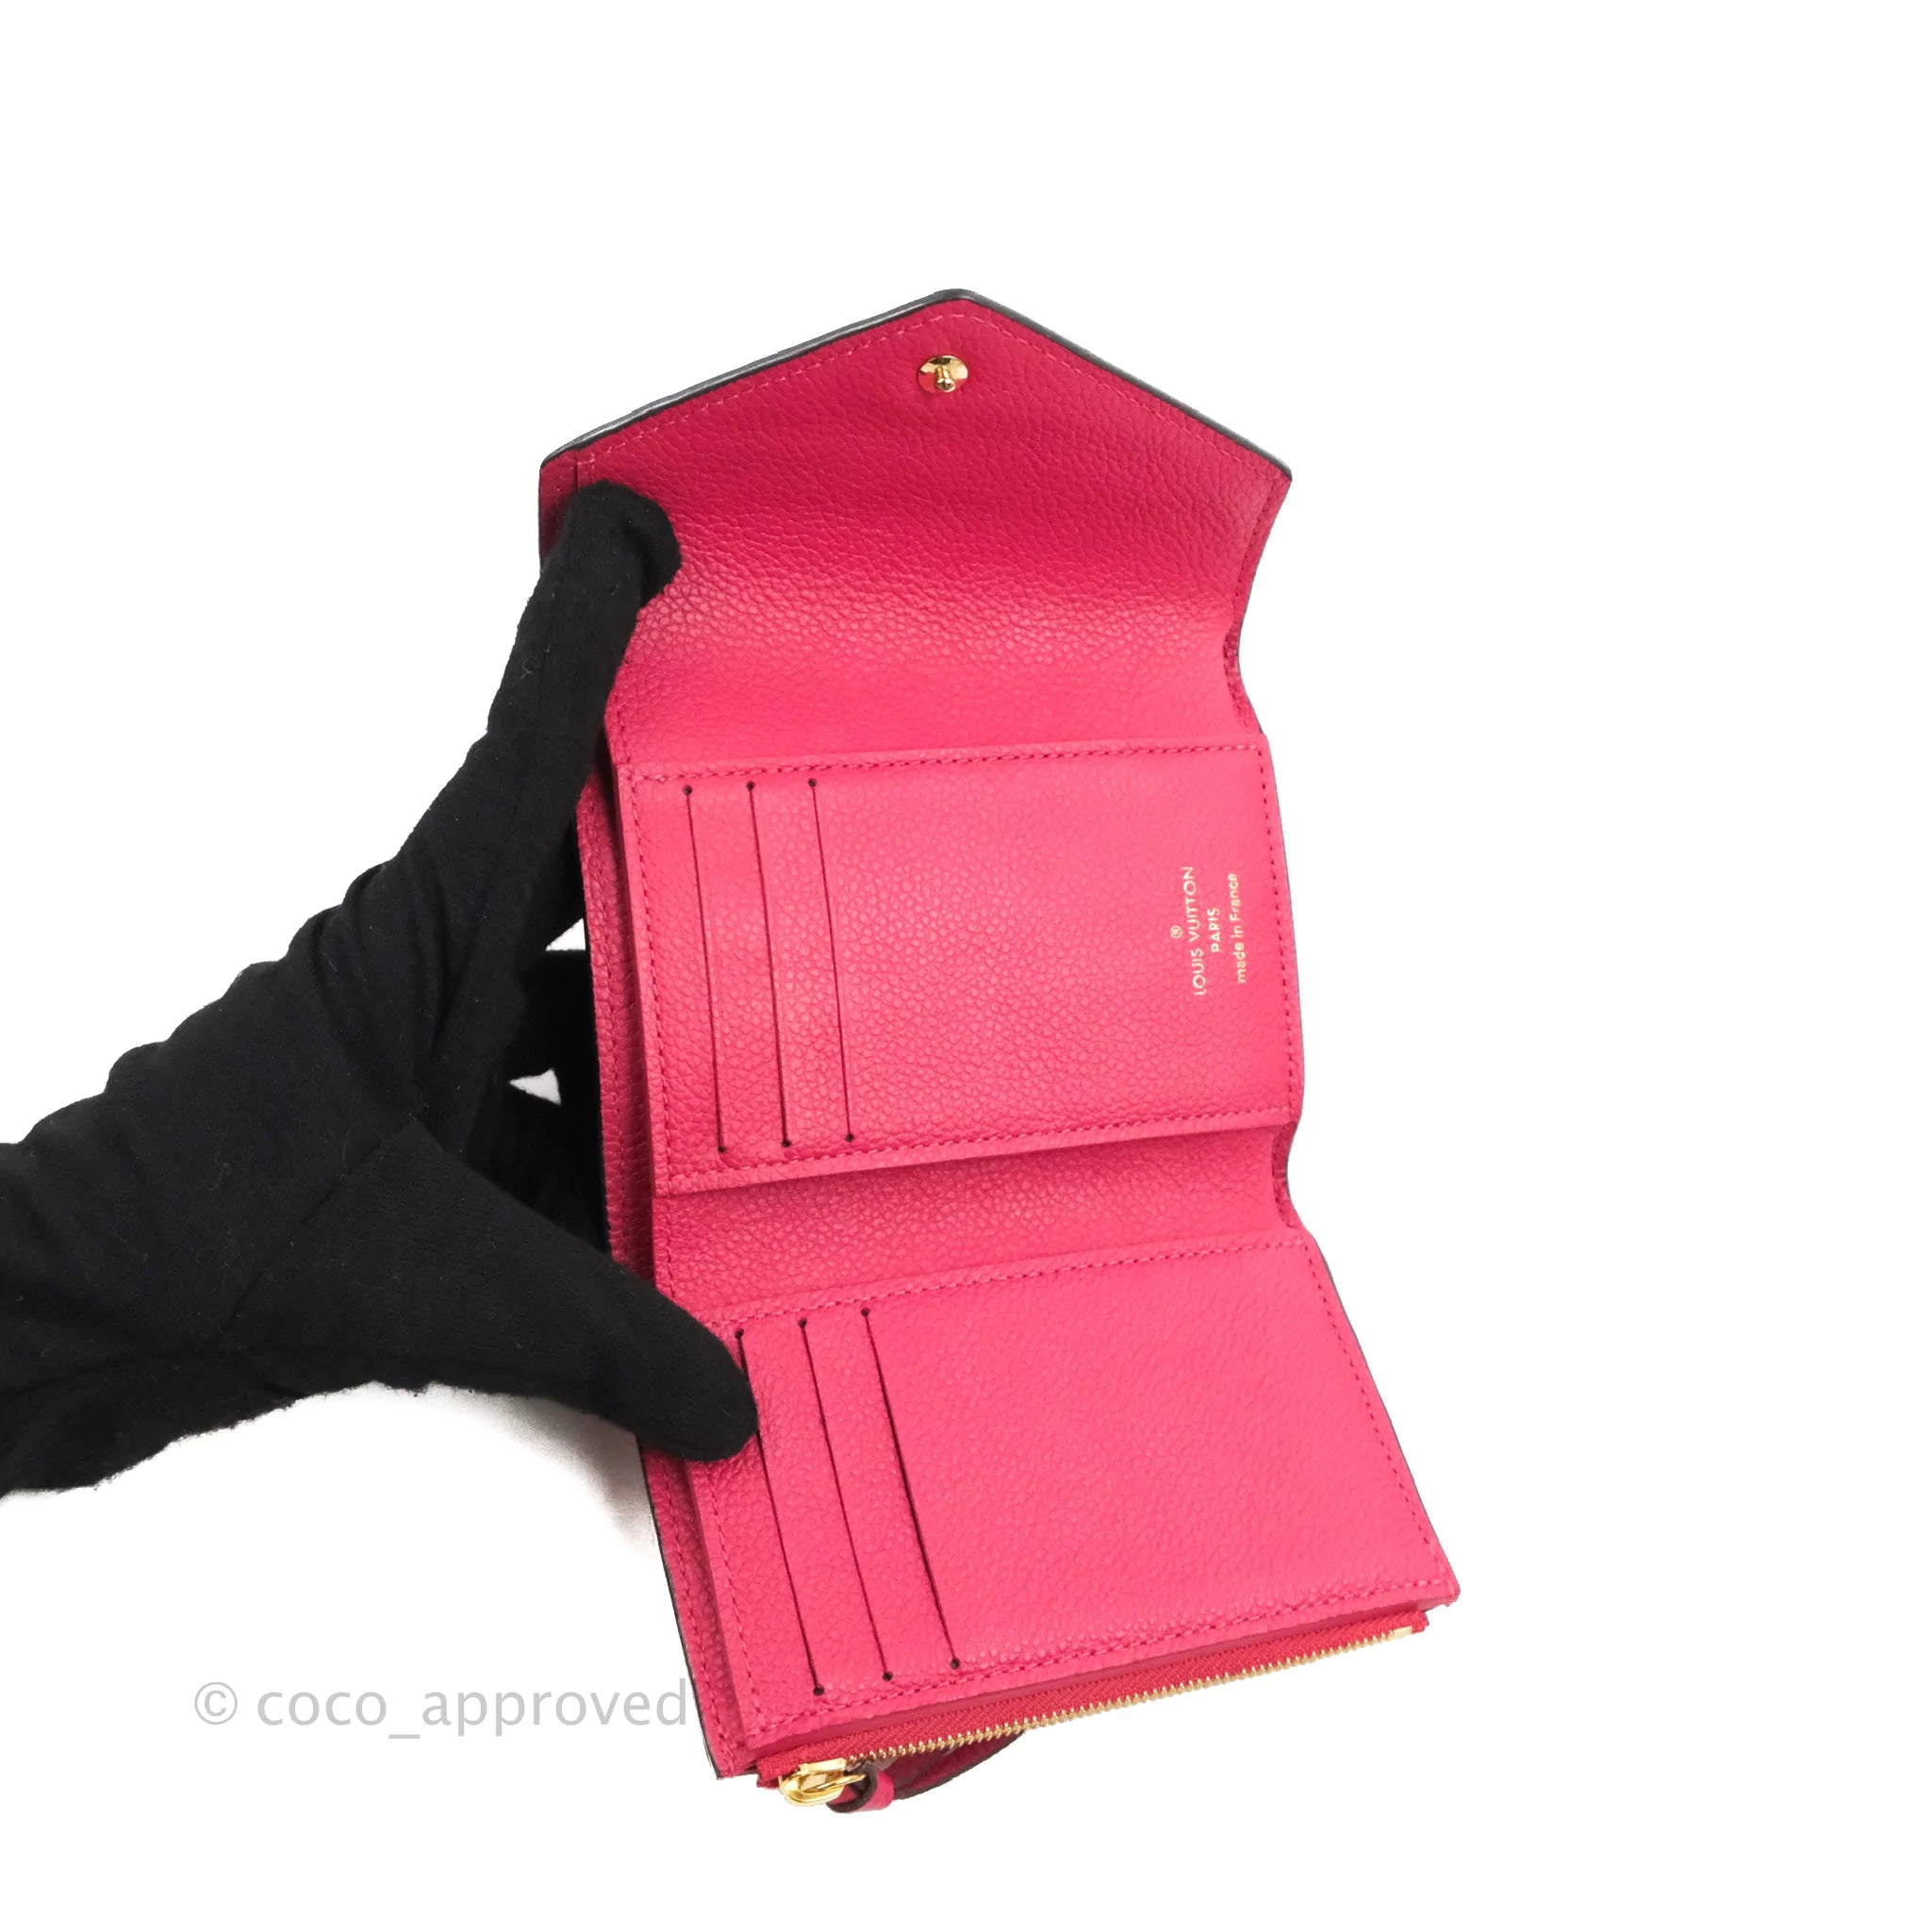 時尚〕Louis Vuitton Monogram Empreinte Virtuose Wallet 超美長夾in Aube @ ◈ ☼  Sasha's ♥ ◈ :: 痞客邦